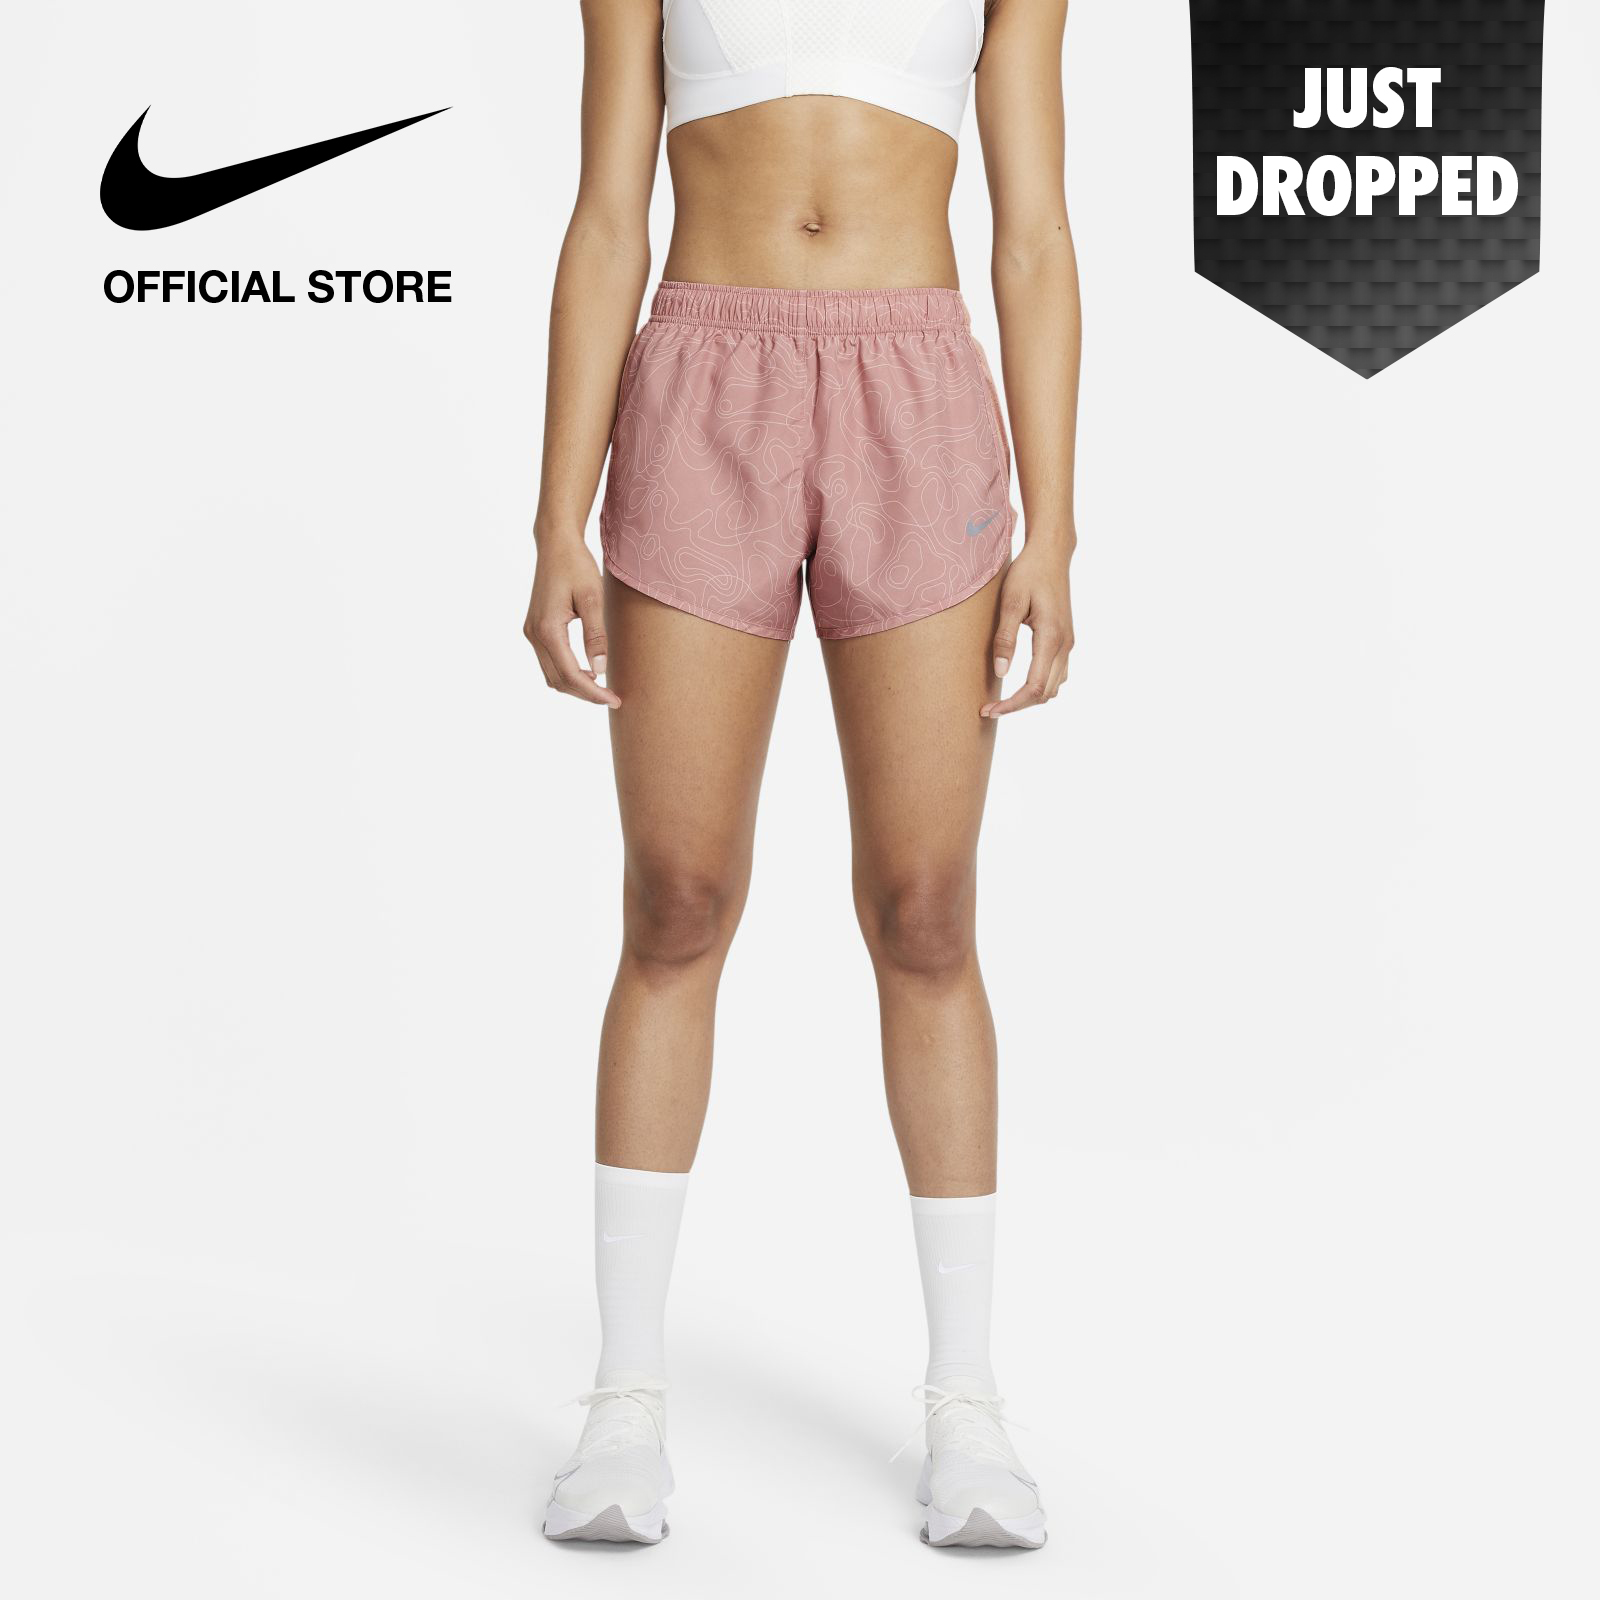 Nike Women's Tempo Run Division Printed Running Shorts - Rust Pink ไนกี้ กางเกงวิ่งขาสั้นผู้หญิงแบบพิมพ์ลาย เทียมโป้ รัน ดิวิชั่น - สีชมพู